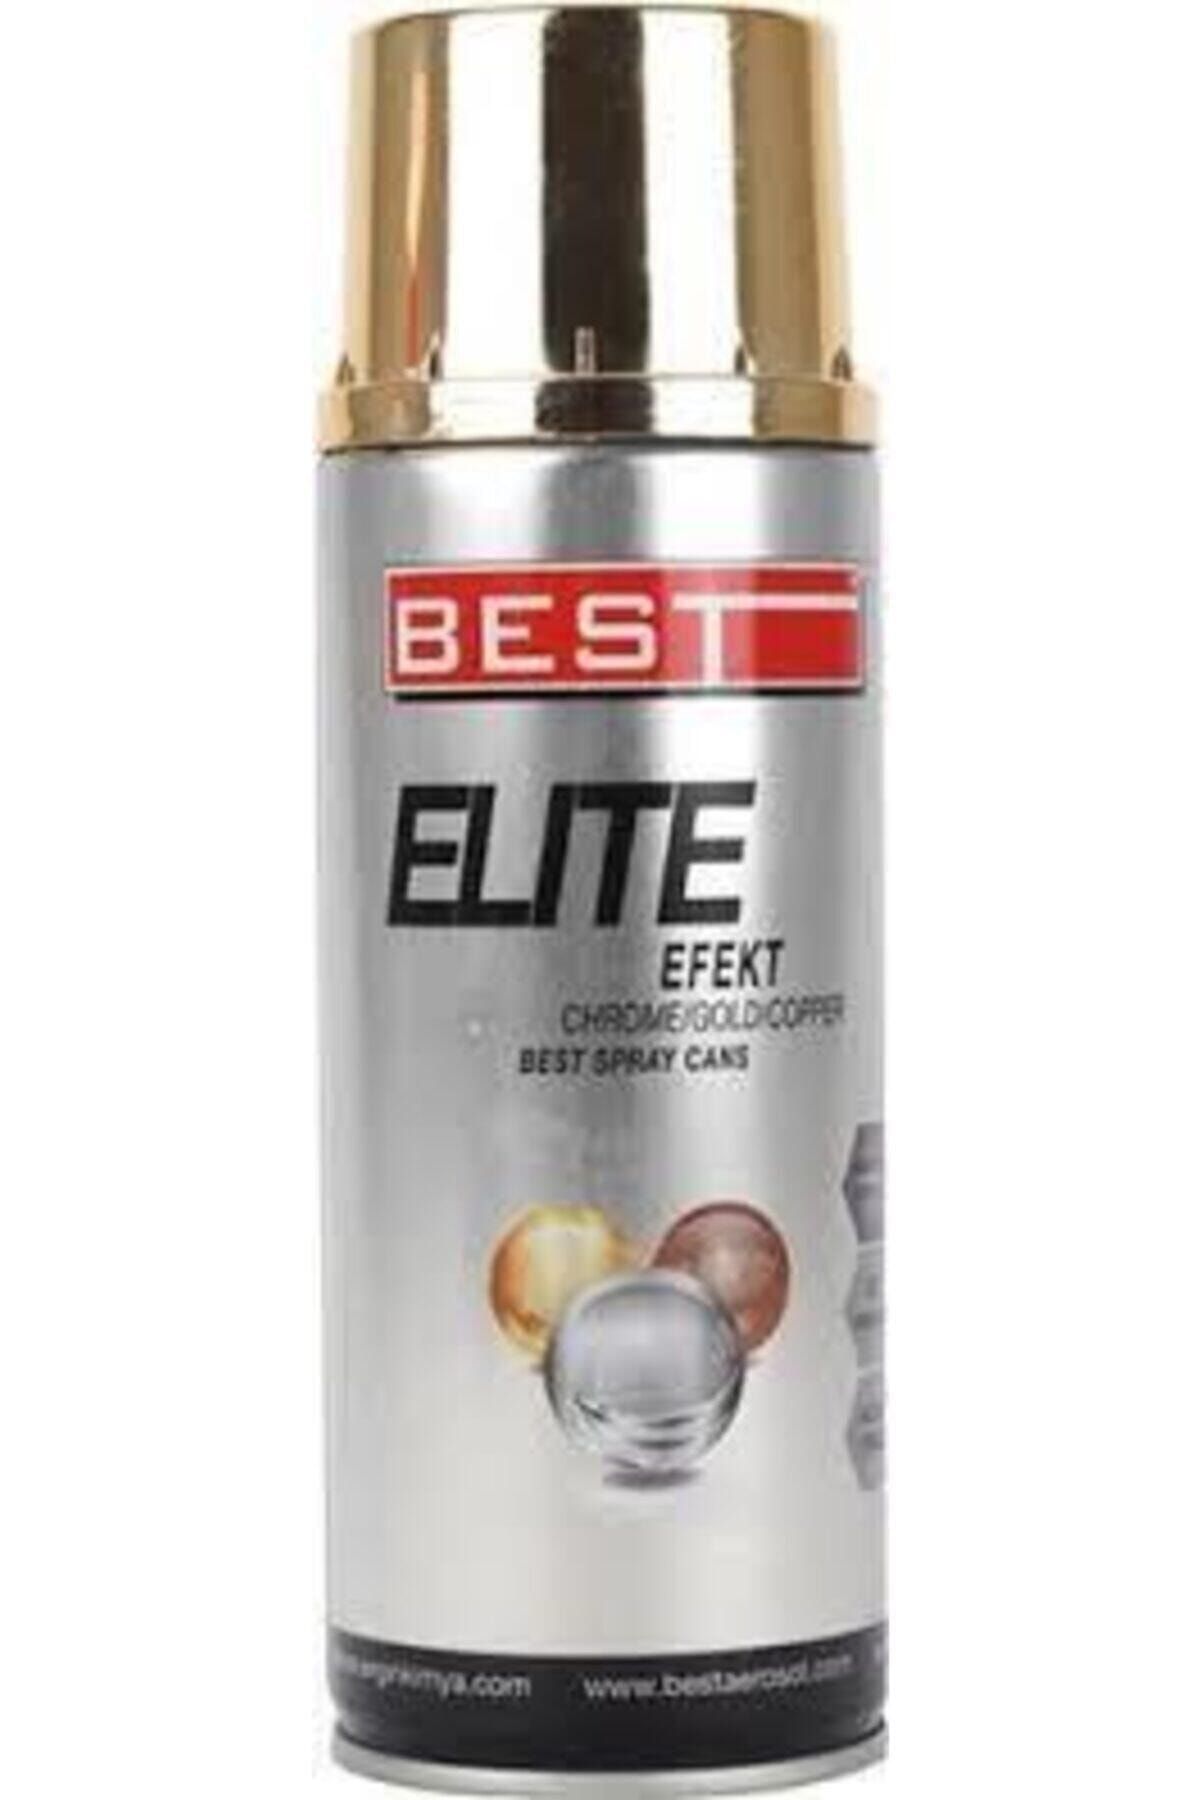 Best Elite Gold / Altın Efekt Sprey Boya 400 ml